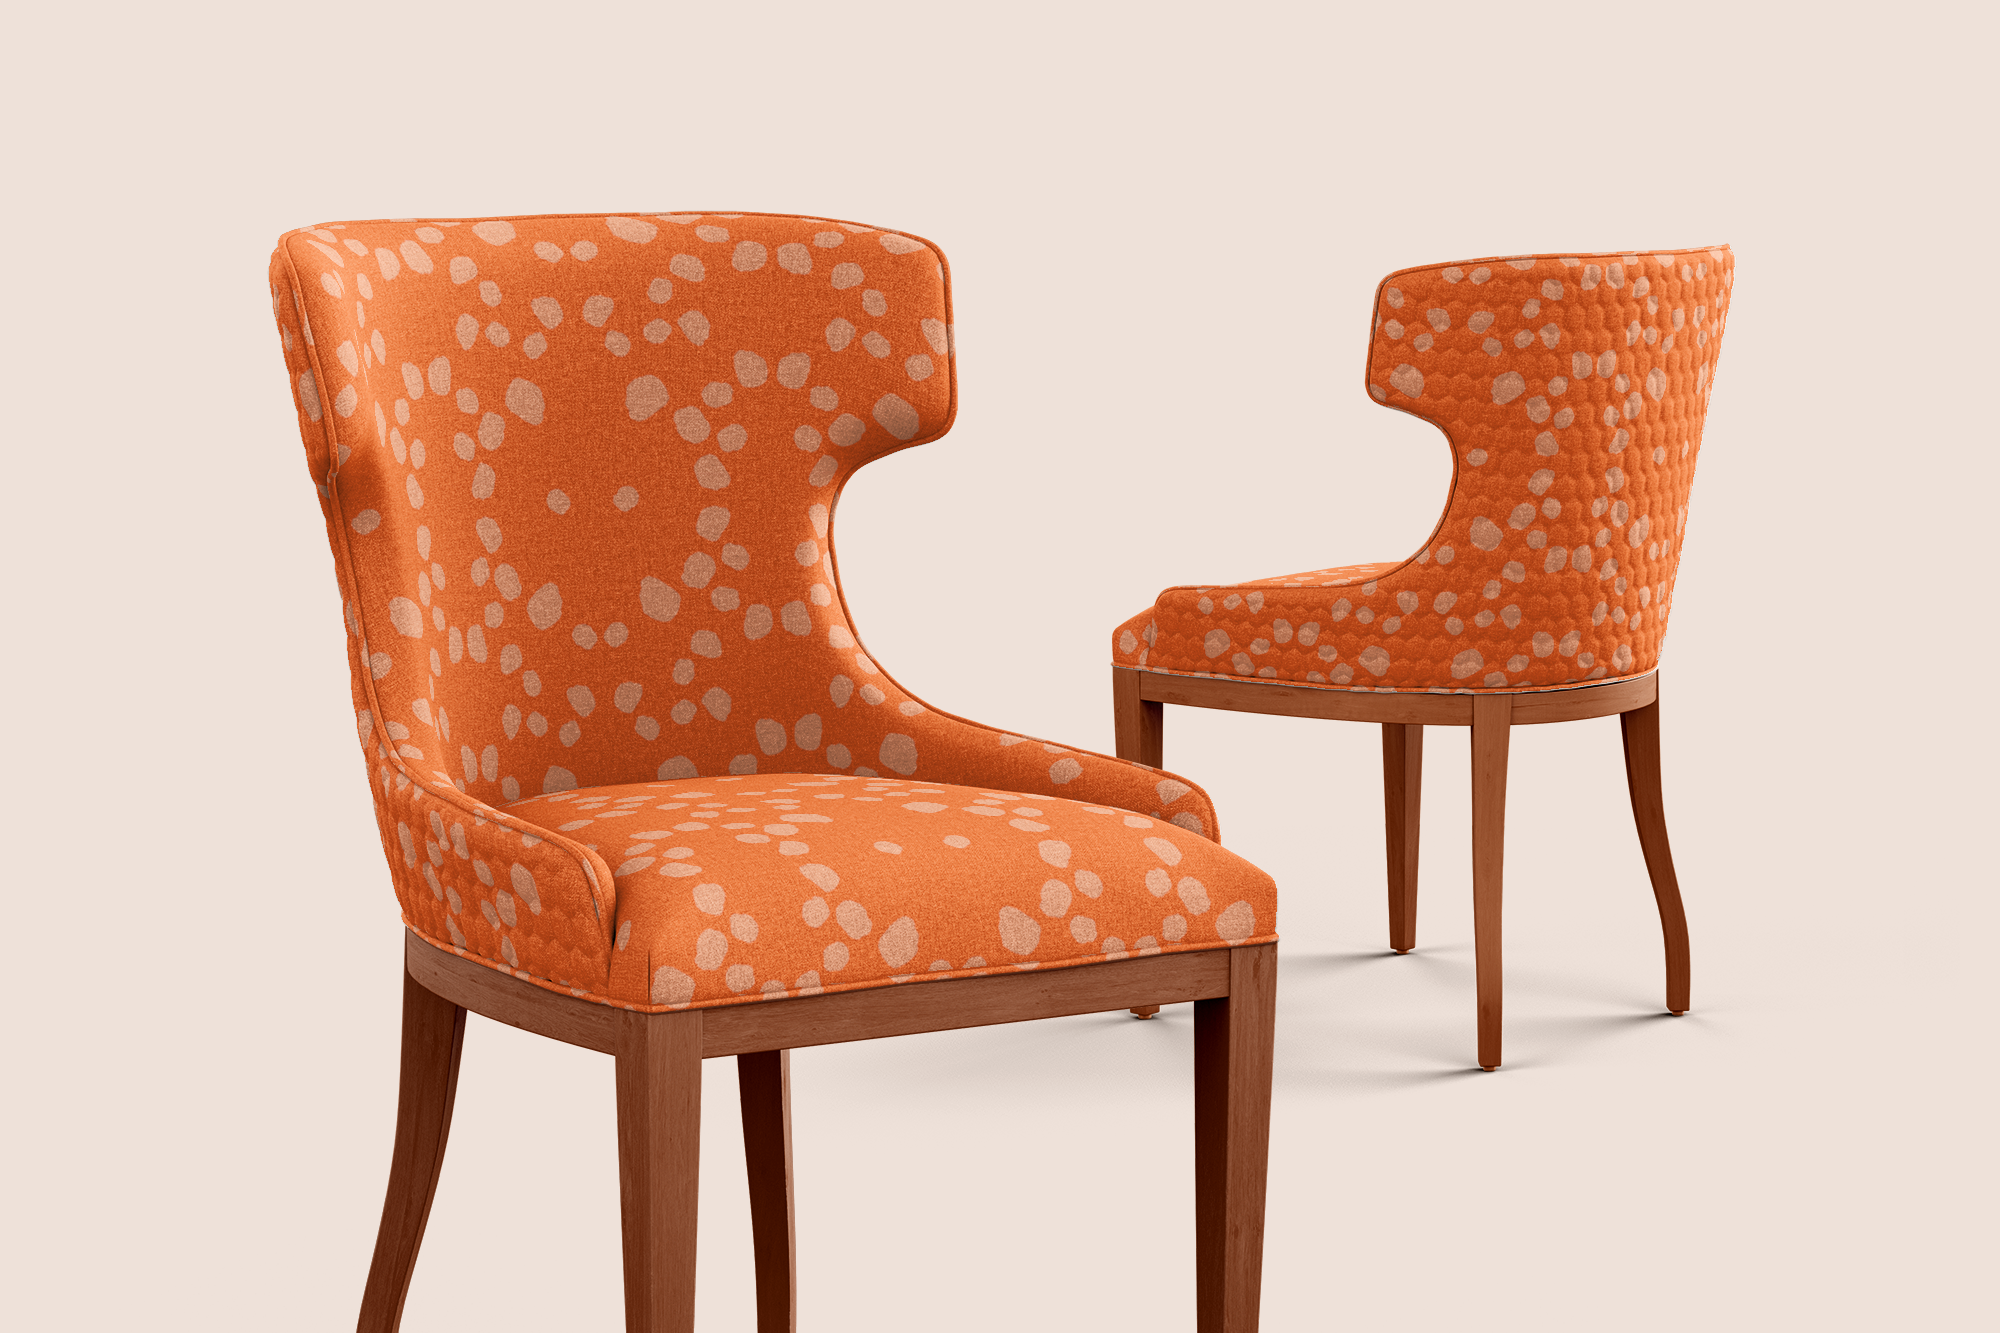 Animal skin digital in orange on orange pattern design printed on recycled fabric upholstery mockup